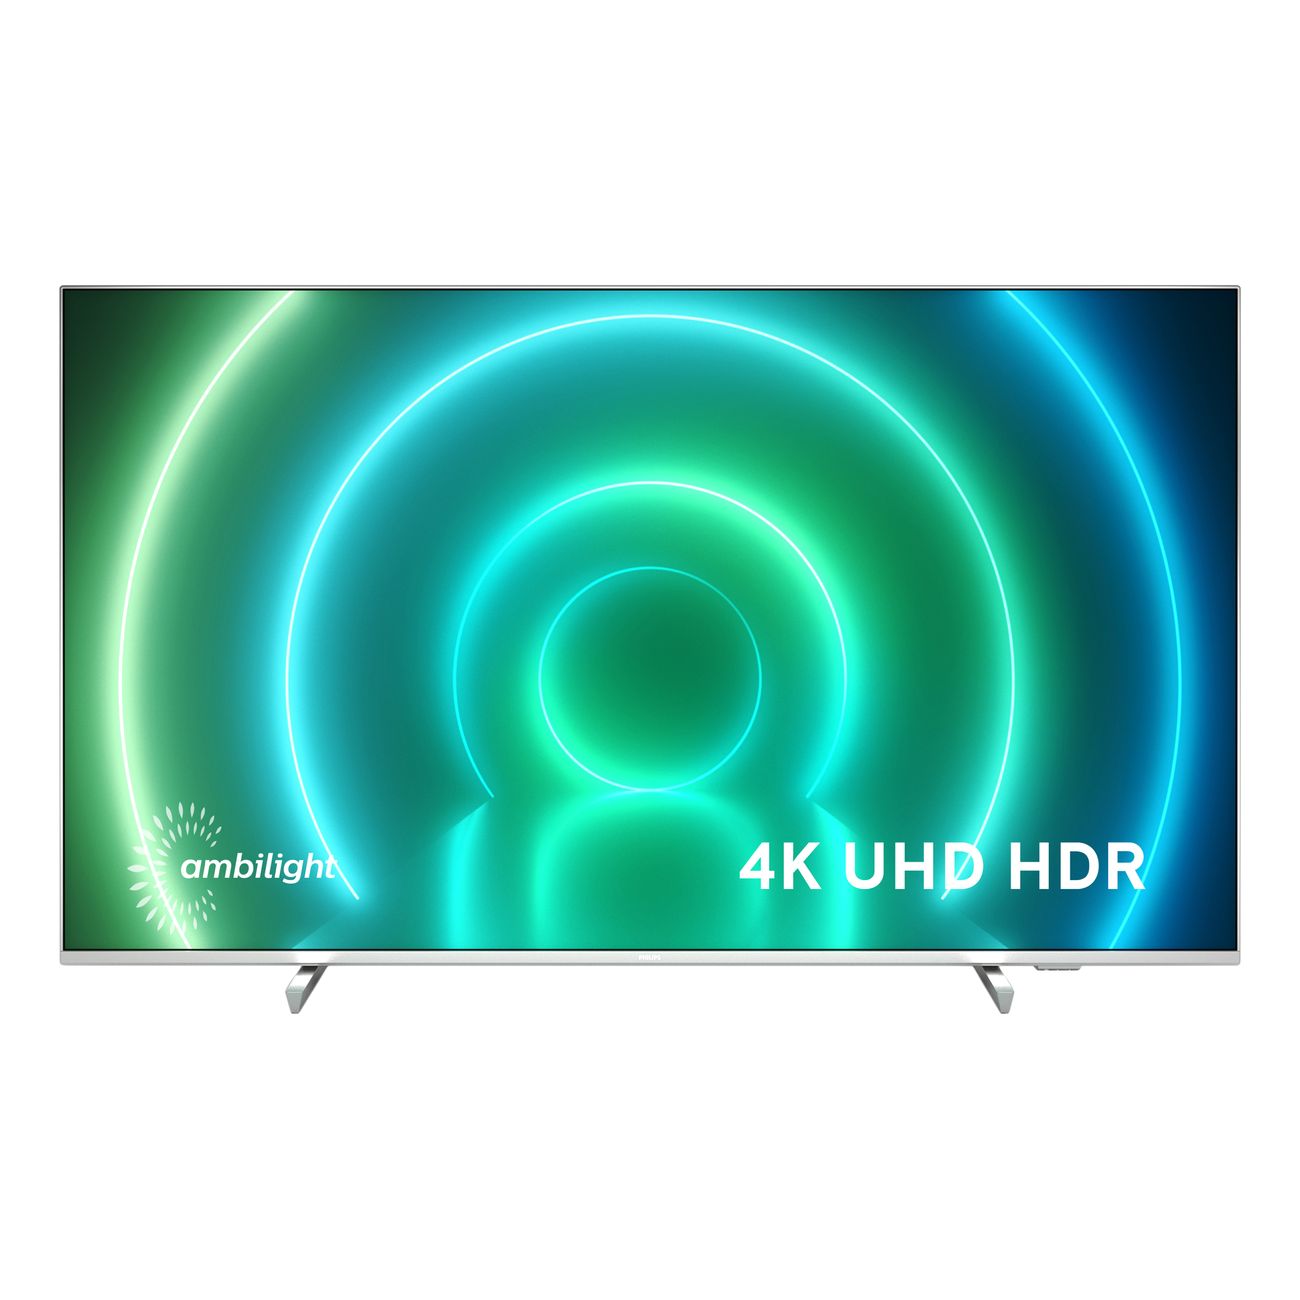 4K (Ultra HD) Smart телевизор Philips 43pus7956/60, цвет серебристый 503718 43pus7956/60 - фото 1